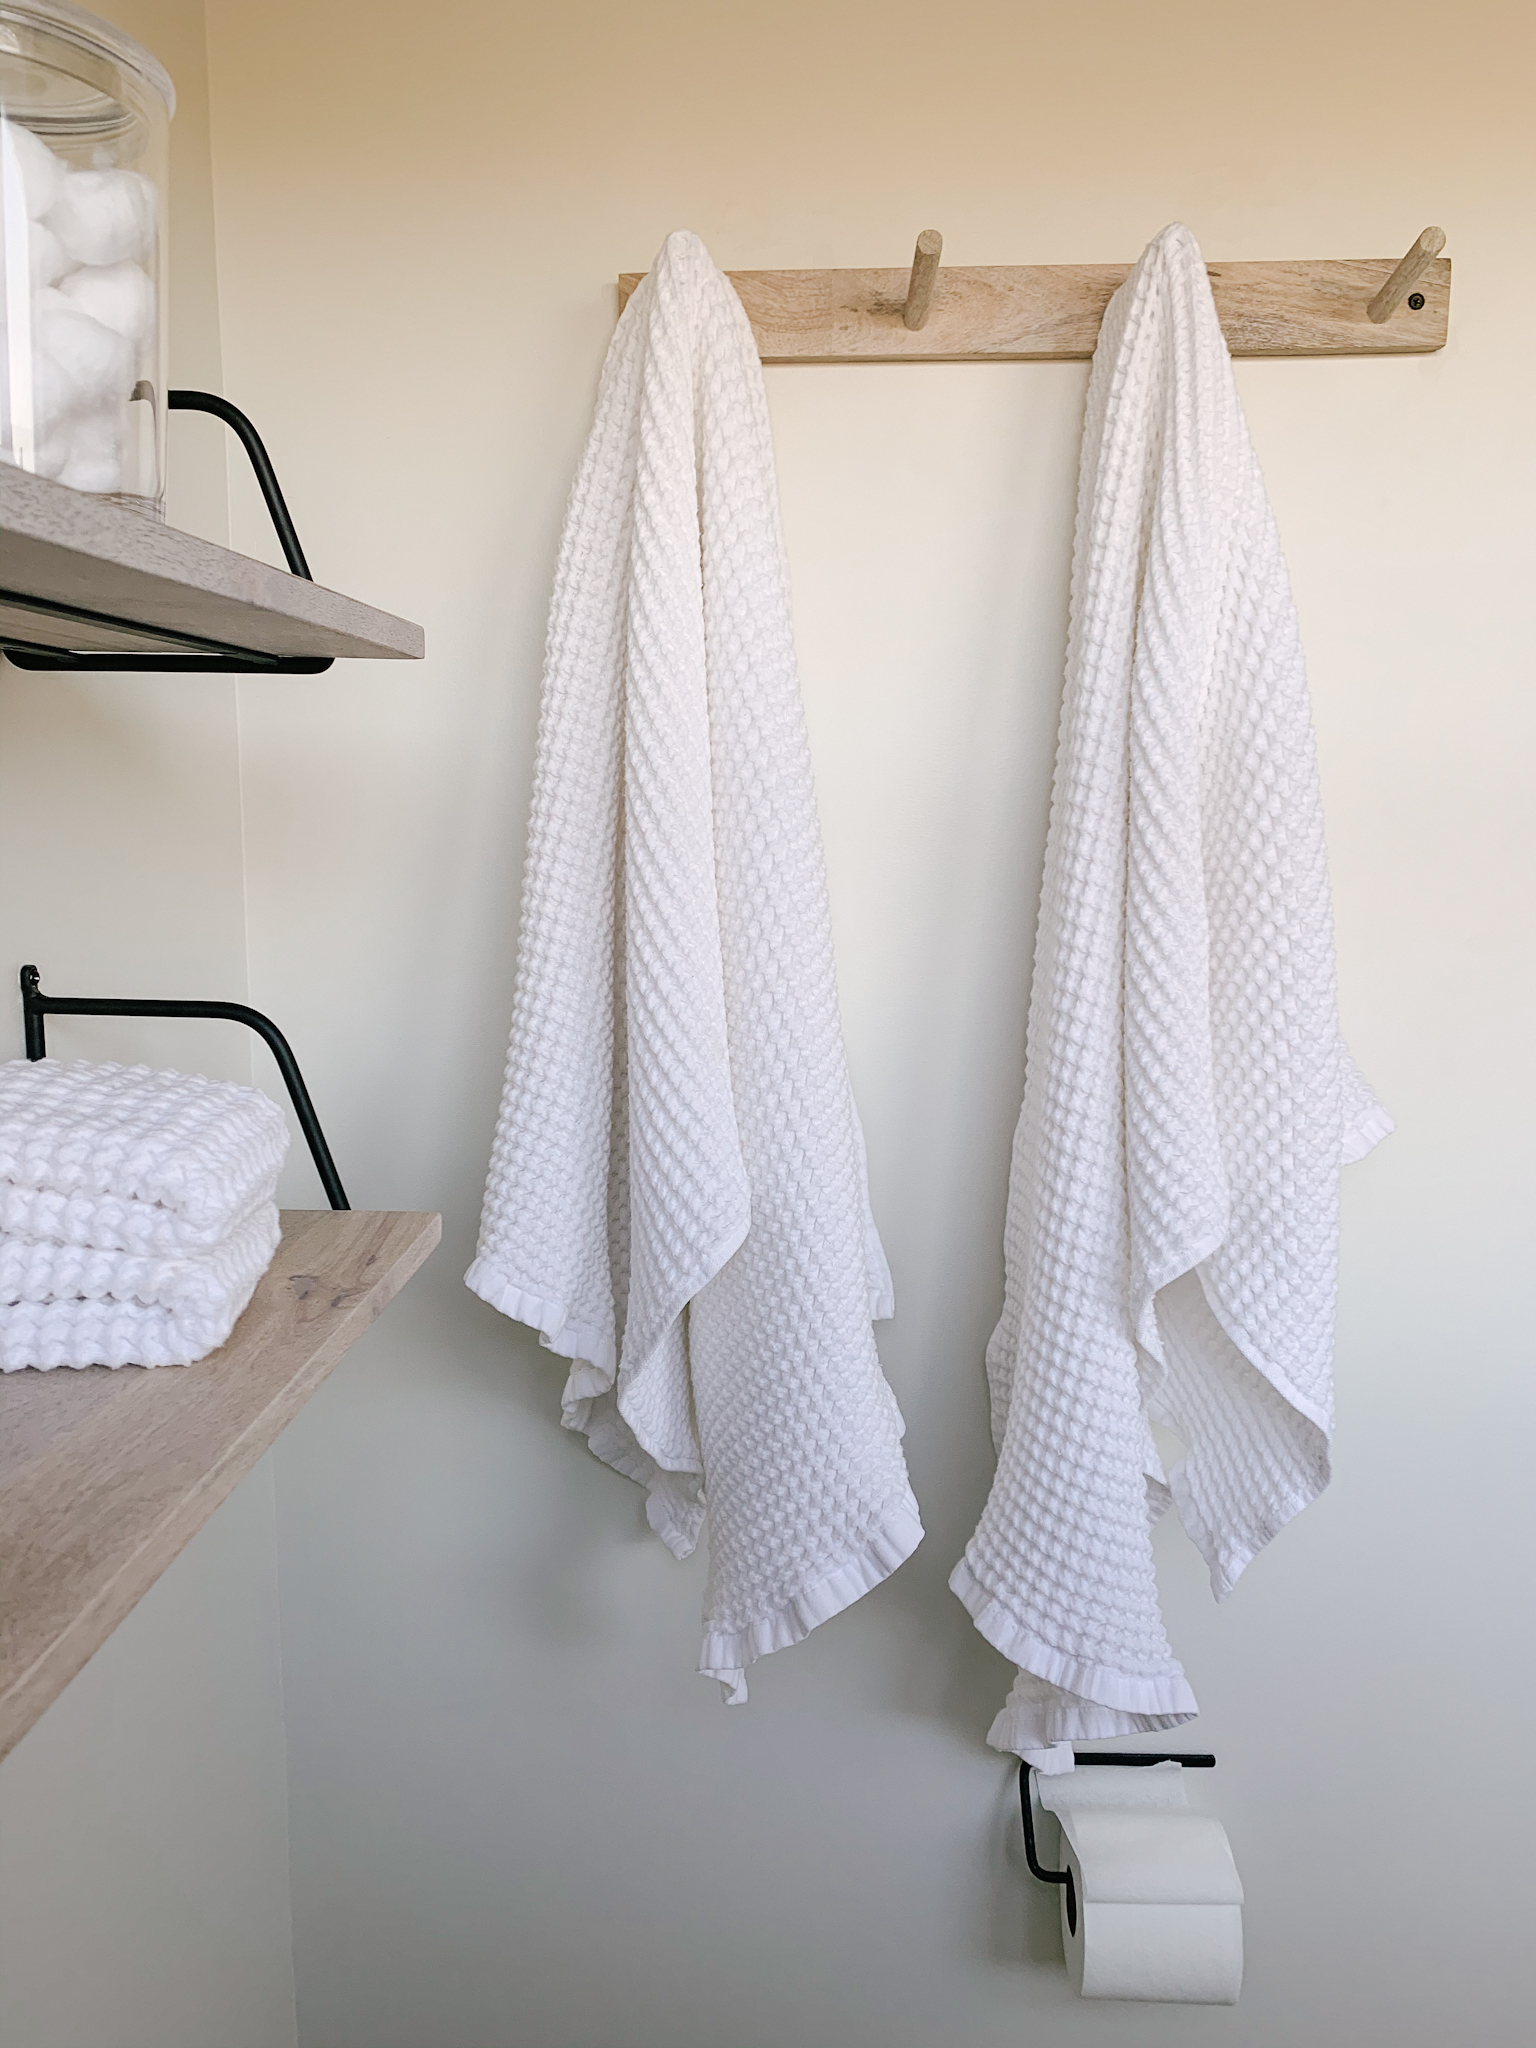 modern wooden peg rack for towels 